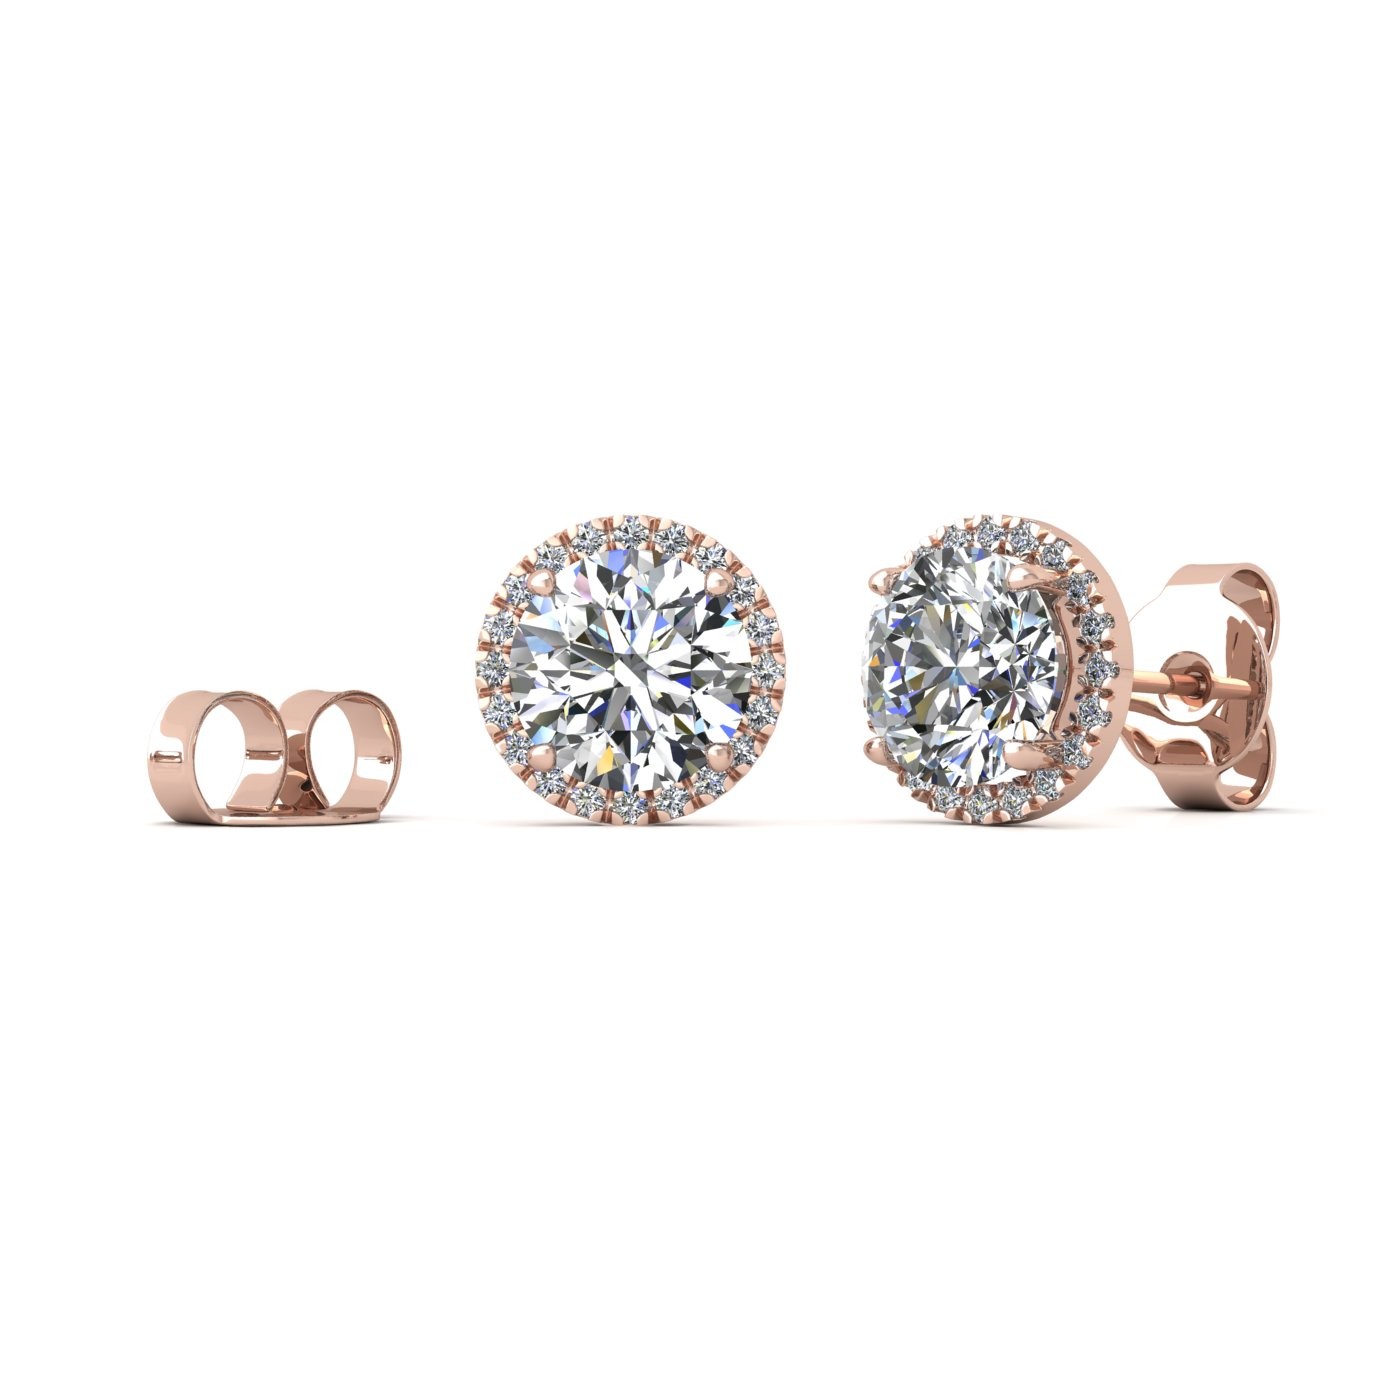 18k white gold  0,5 ct each (1,0 tcw) 4 prongs round shape diamond earrings with diamond pavÉ set halo Photos & images